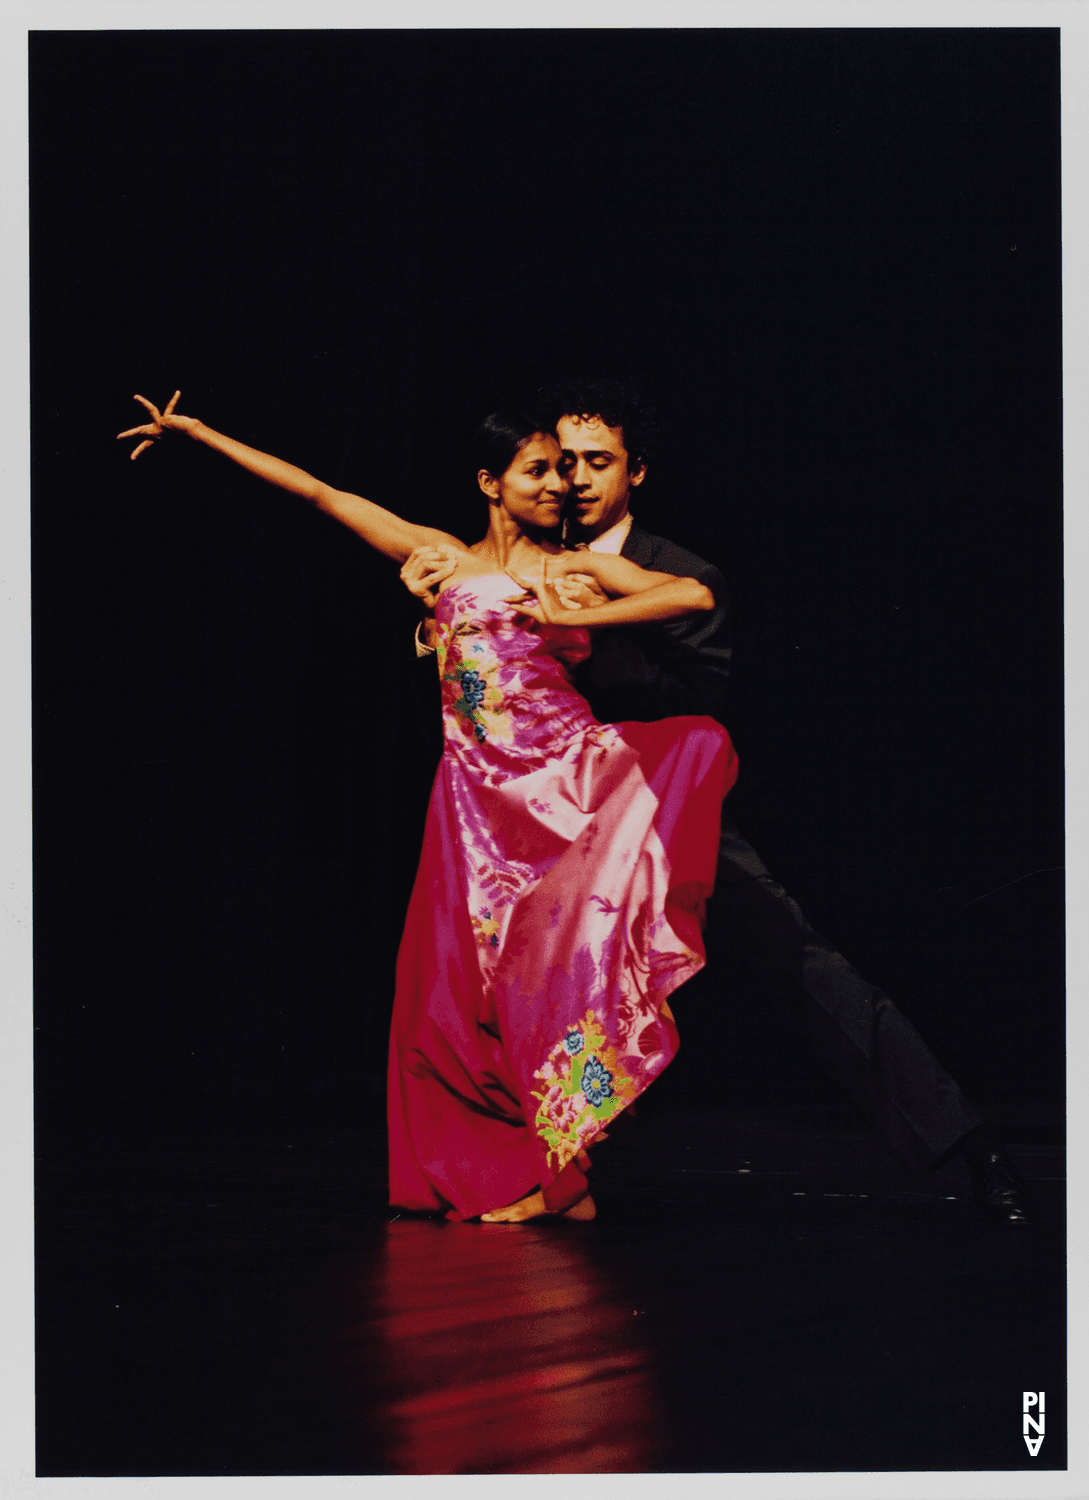 Jorge Puerta Armenta und Shantala Shivalingappa in „Nefés“ von Pina Bausch, 21. März 2003